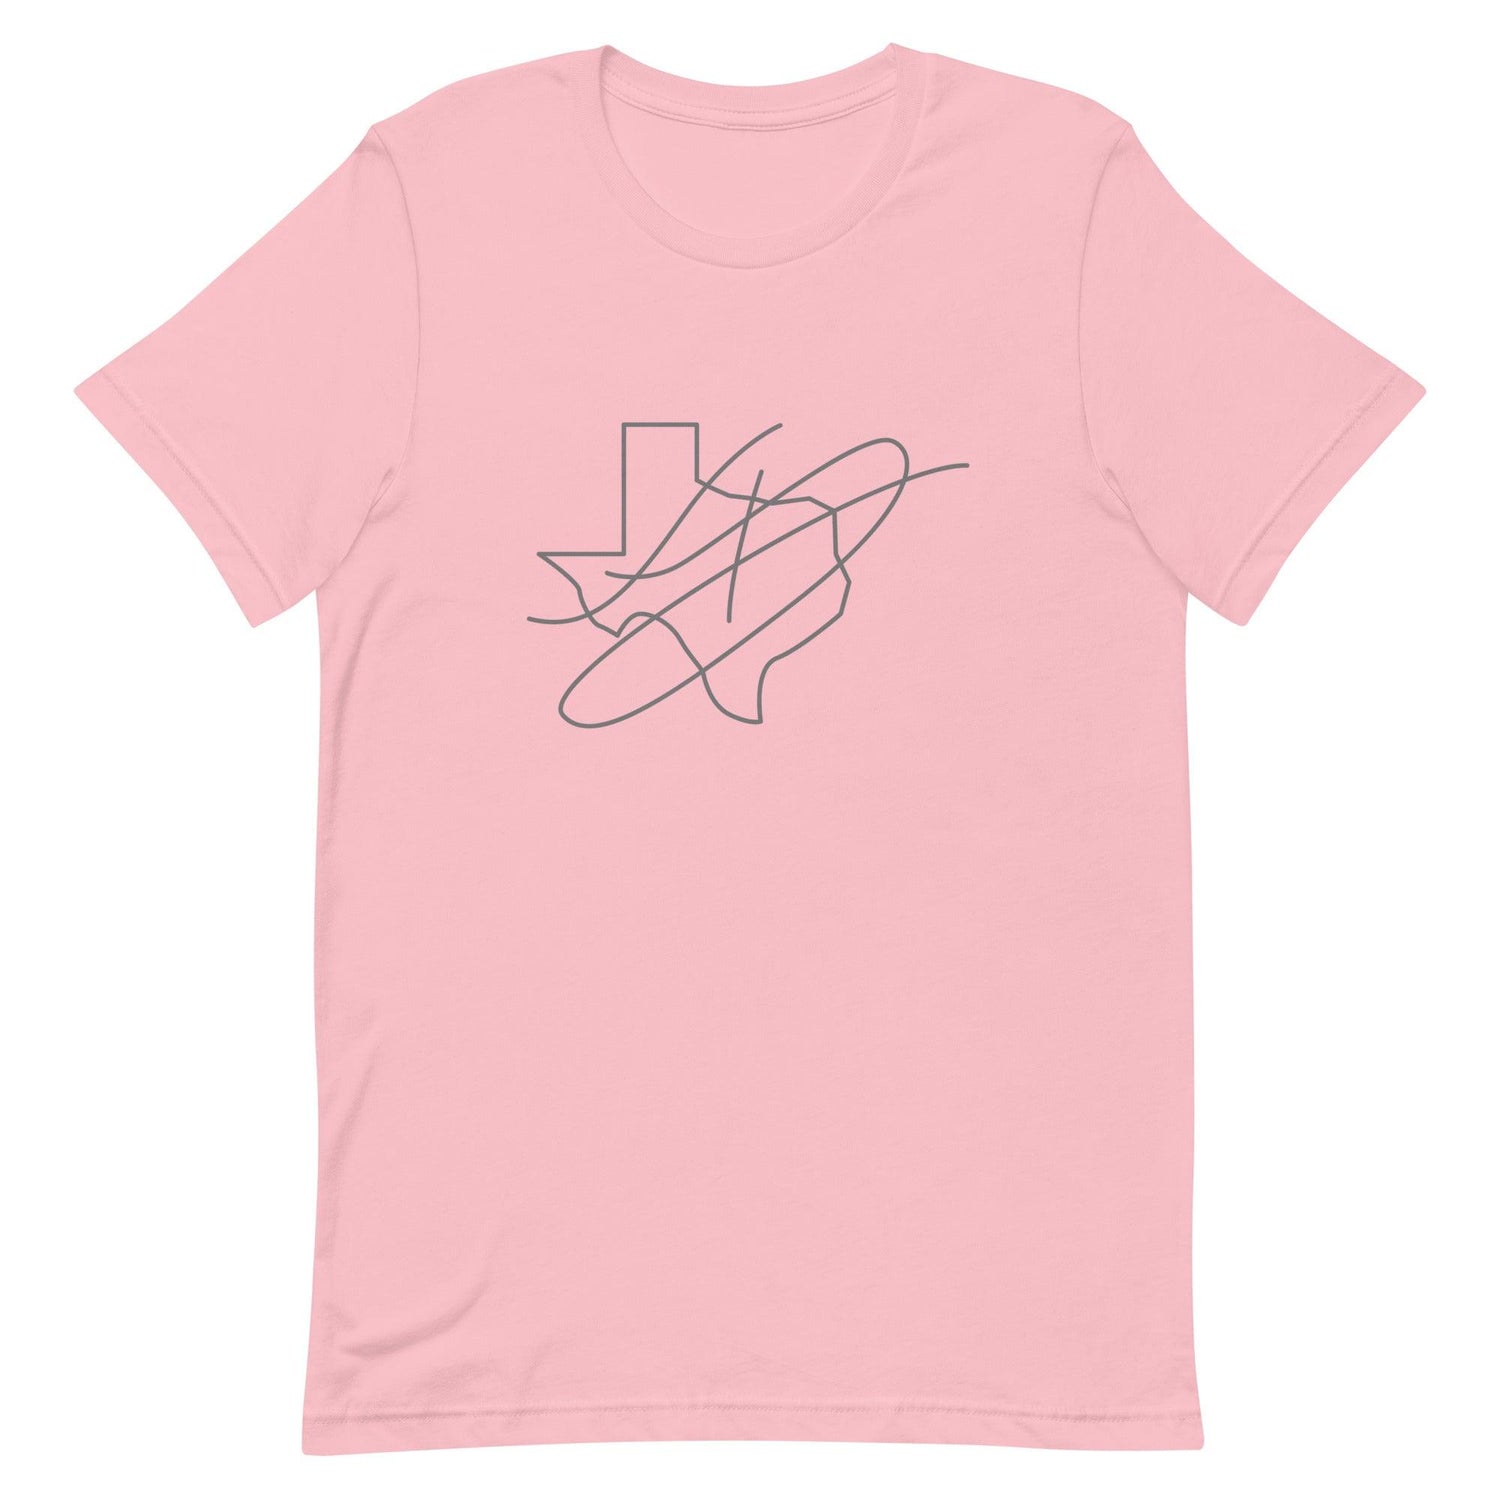 Andrew Jones "Signature" t-shirt - Fan Arch